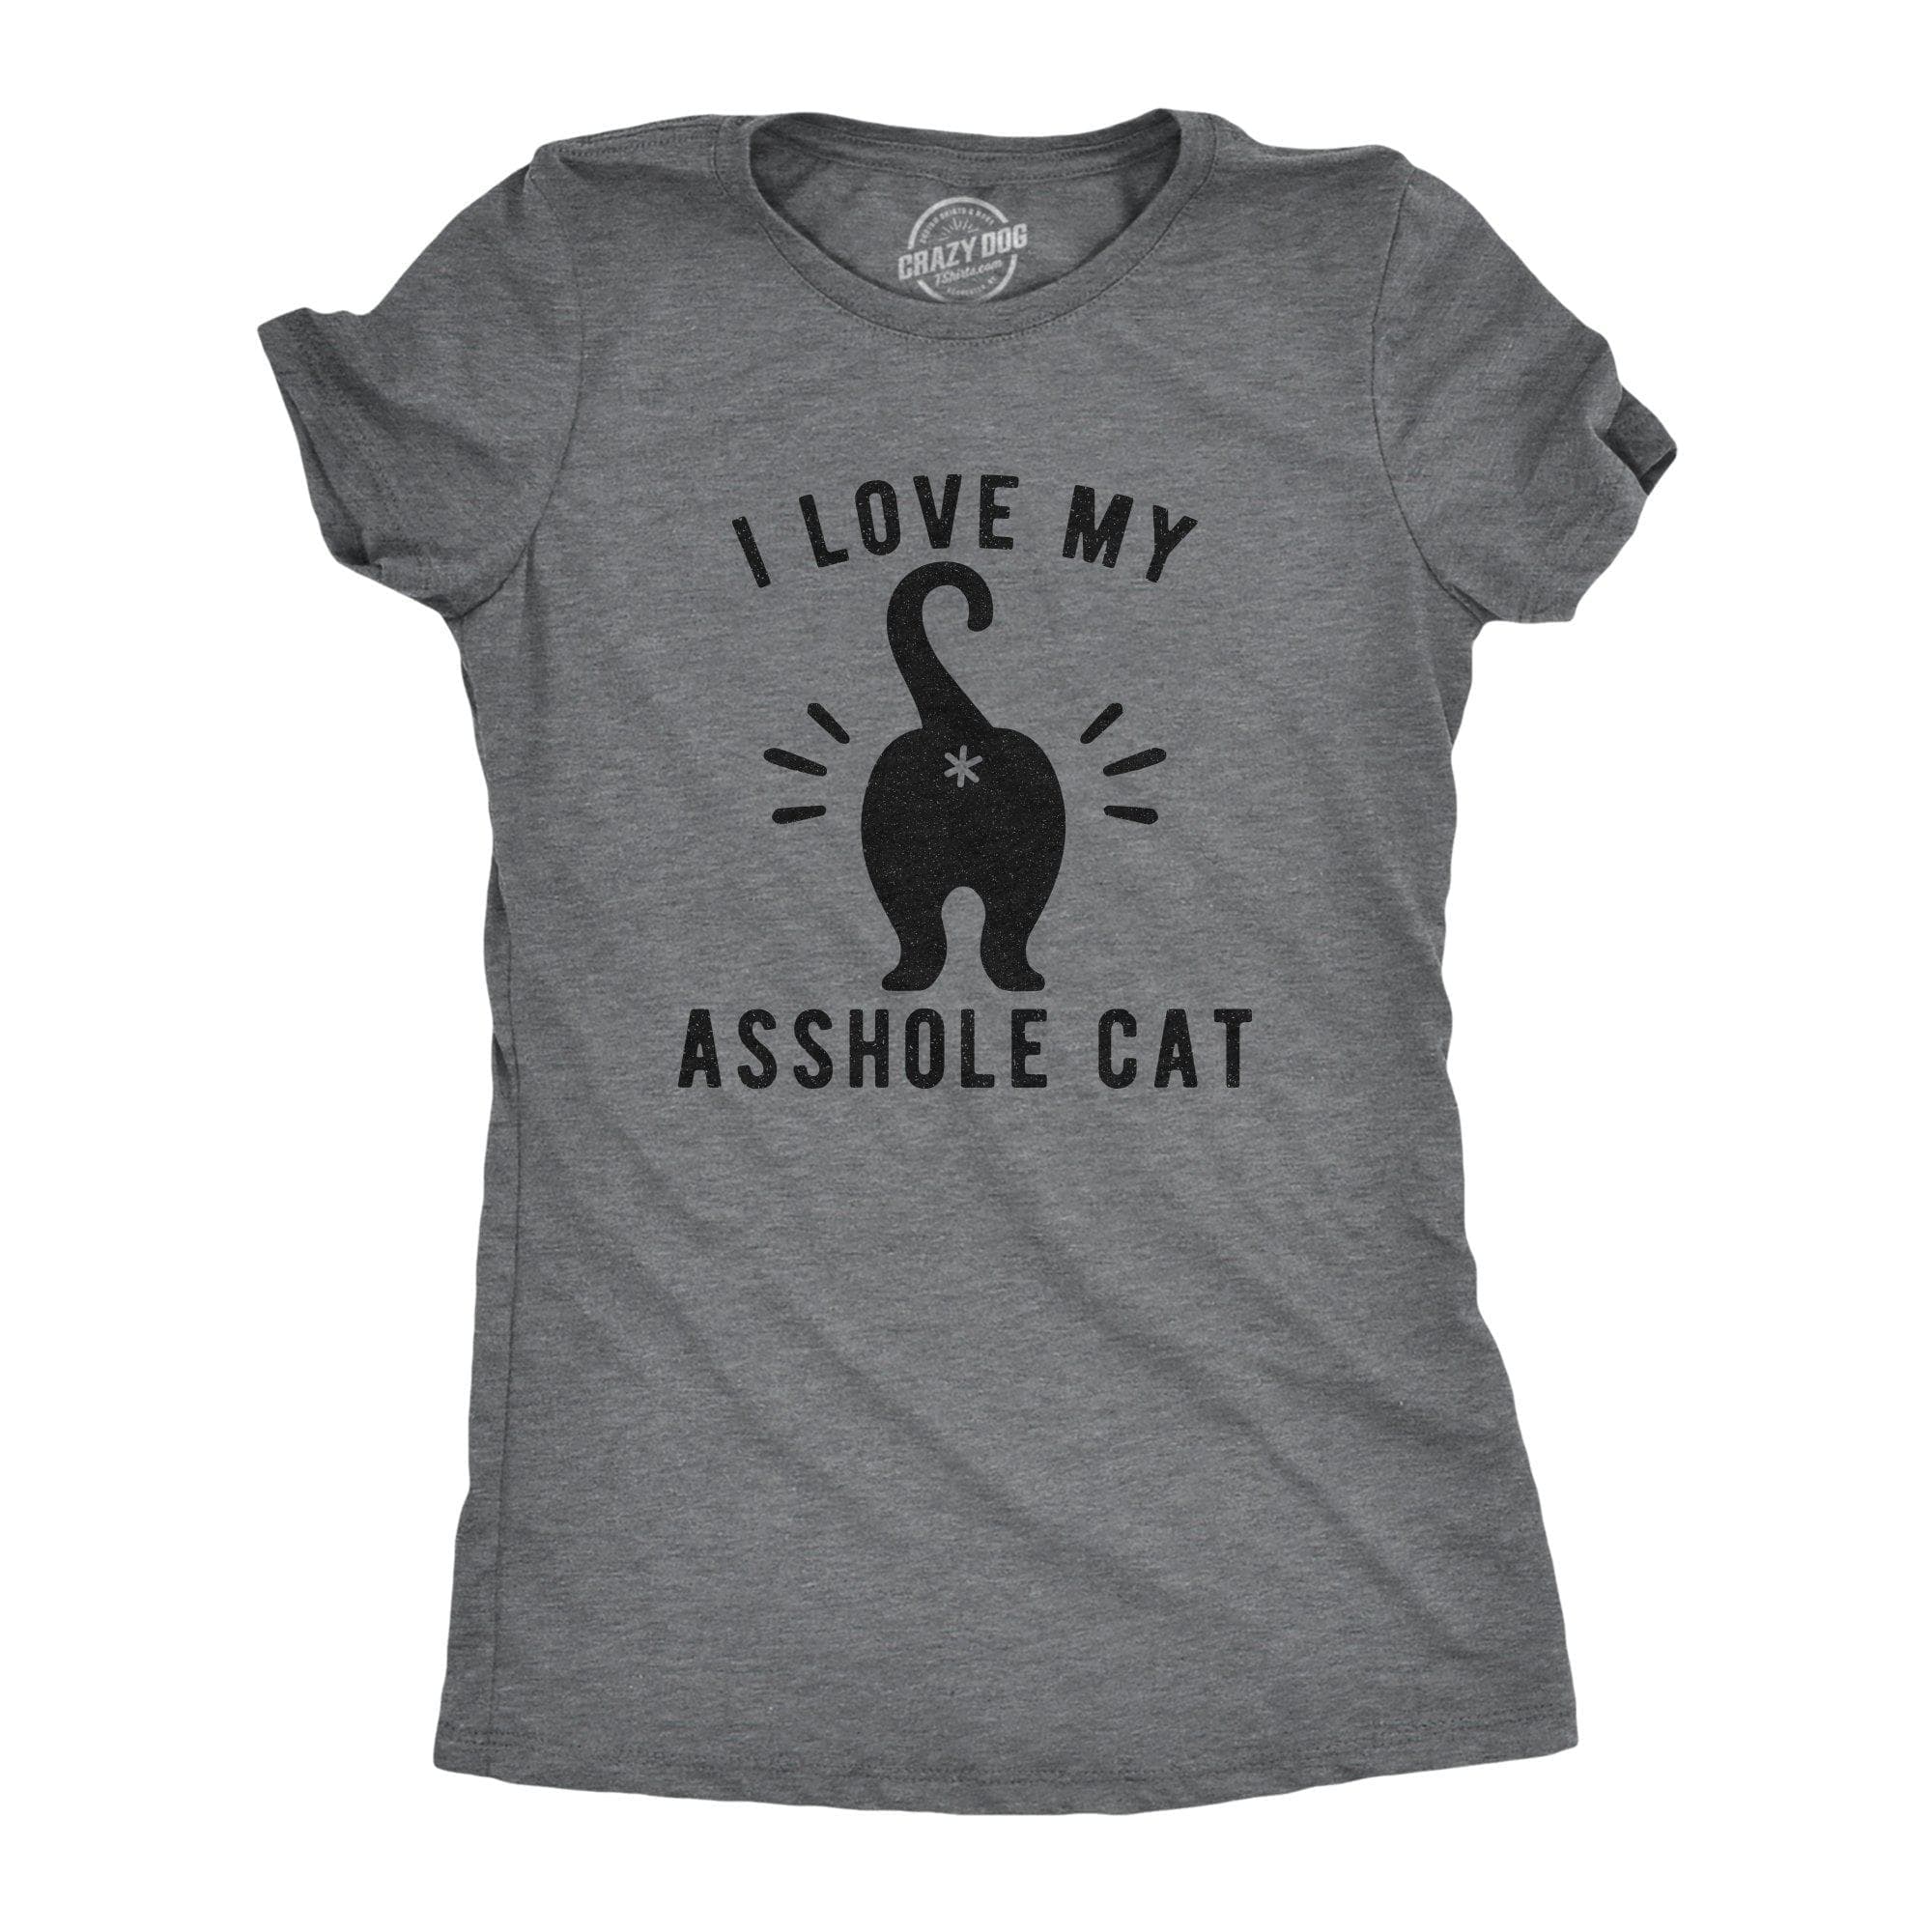 I Love My Asshole Cat Women's Tshirt - Crazy Dog T-Shirts